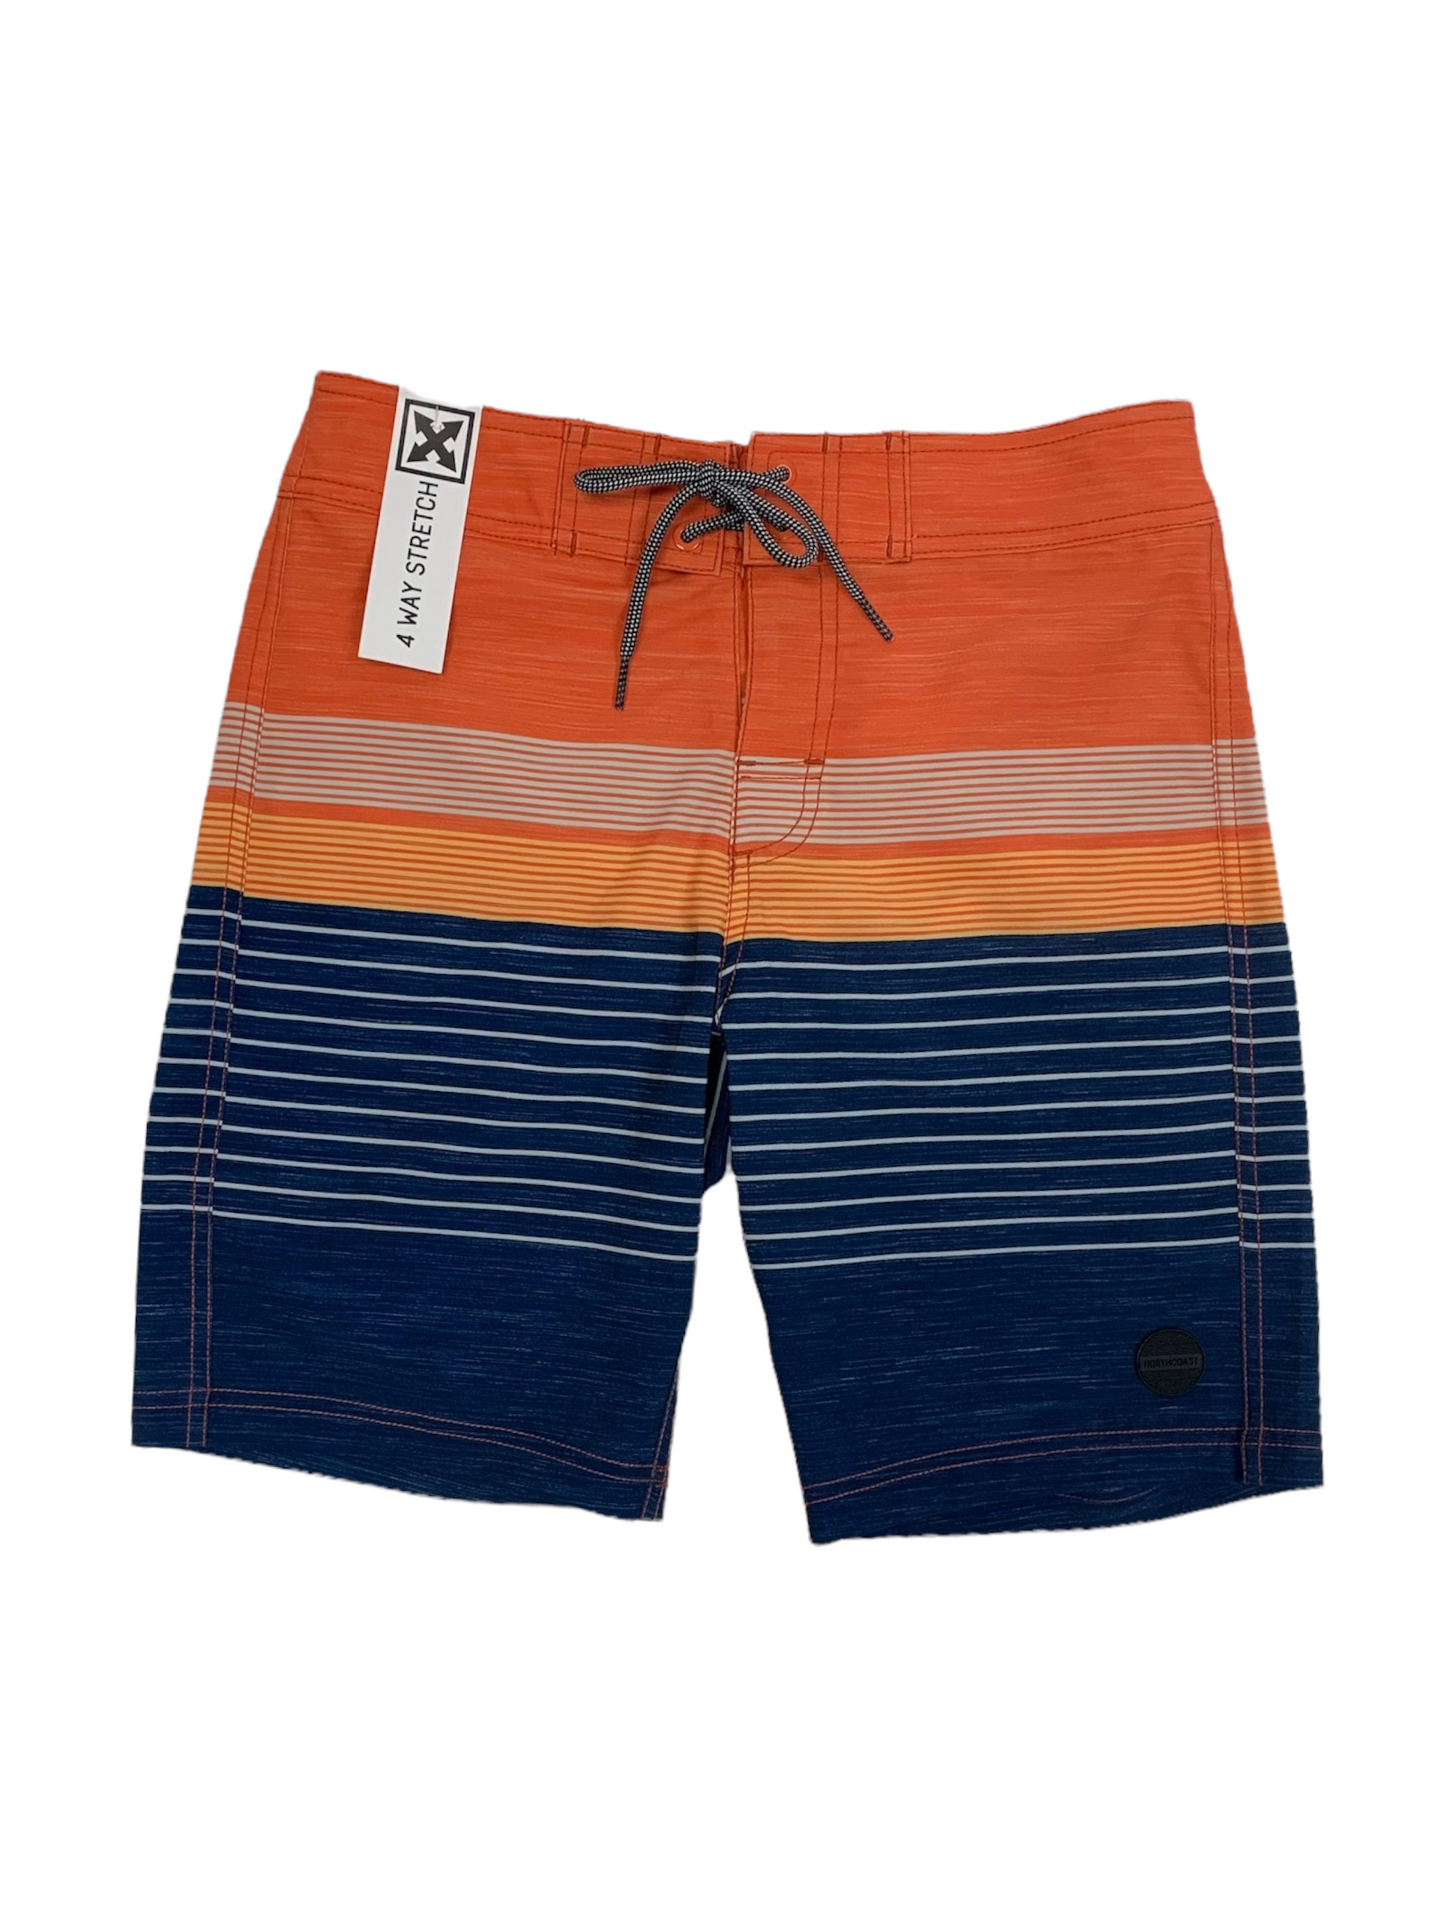 Men's Northcoast orange and blue swim short